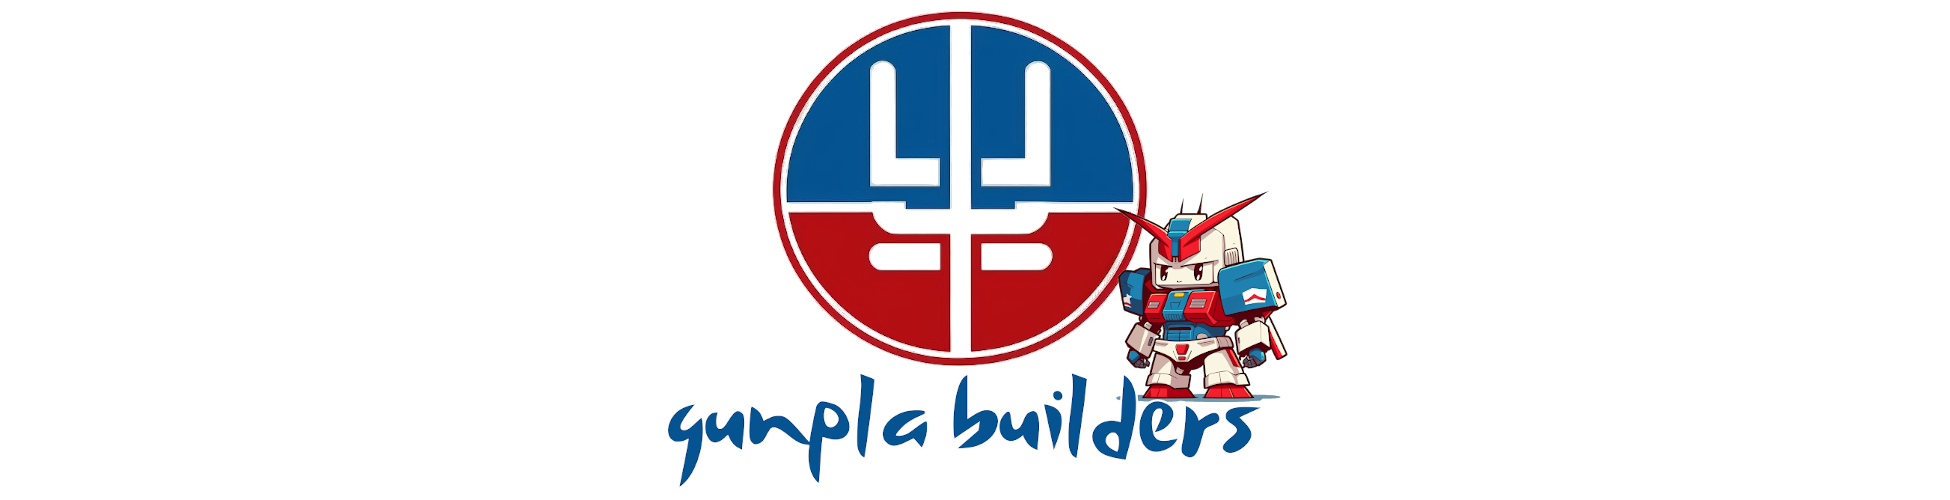 Gunpla Builders 